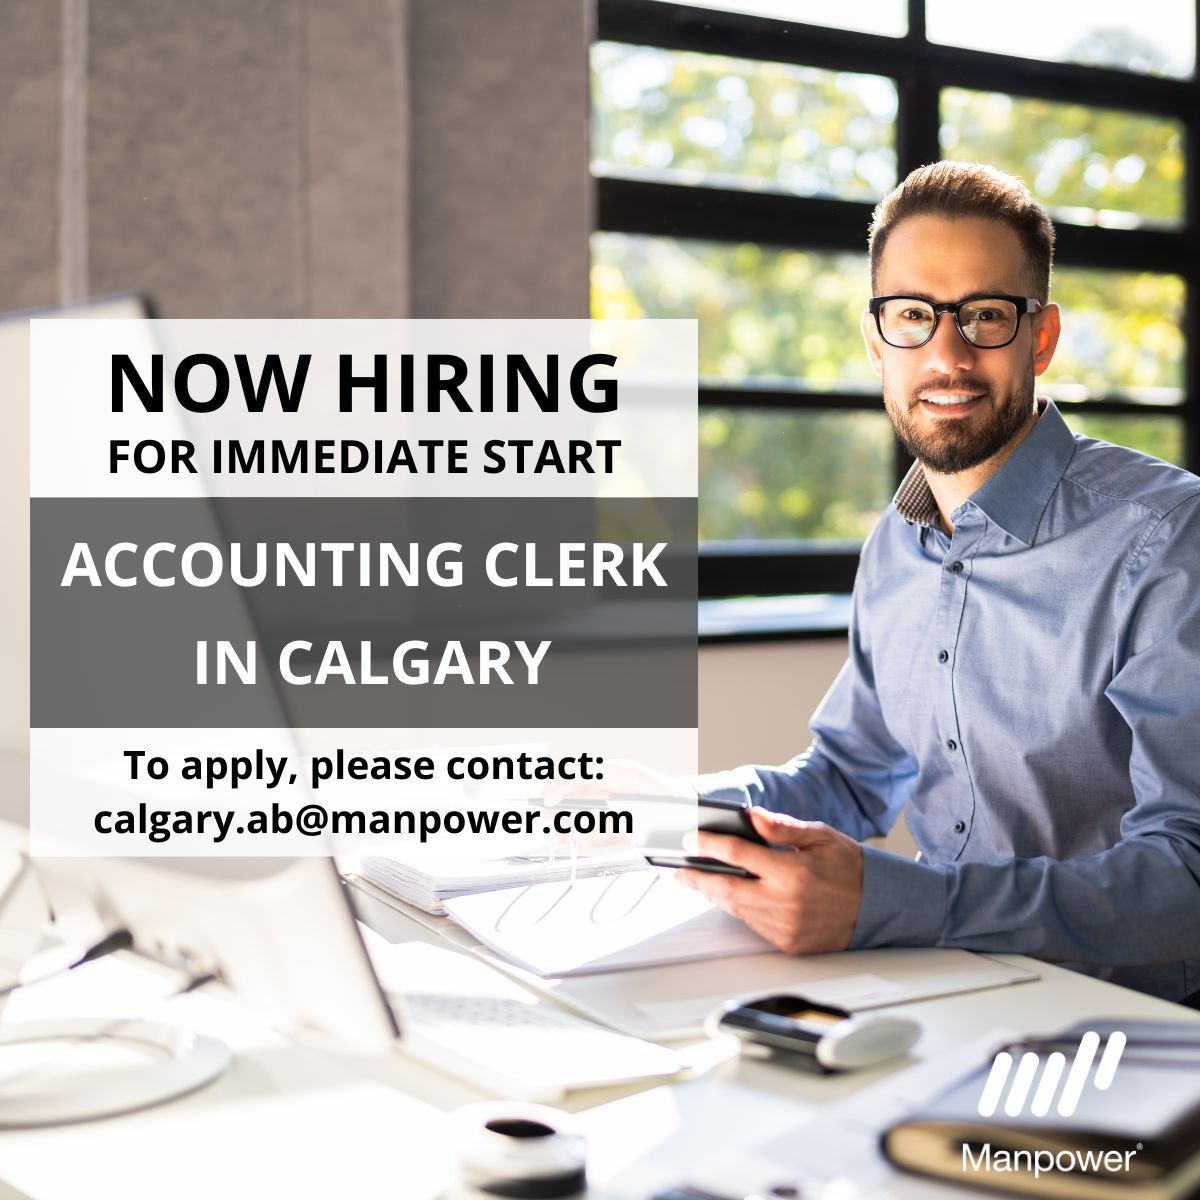 #NOWHIRING: Accounting Clerk in Calgary, Alberta

To apply, please forward your resume to calgary.ab@manpower.com

#manpowerab #alberta #albertajobs #yycjobs #calgaryjobs #manpowerjobs #yyc #calgary #accountingclerk